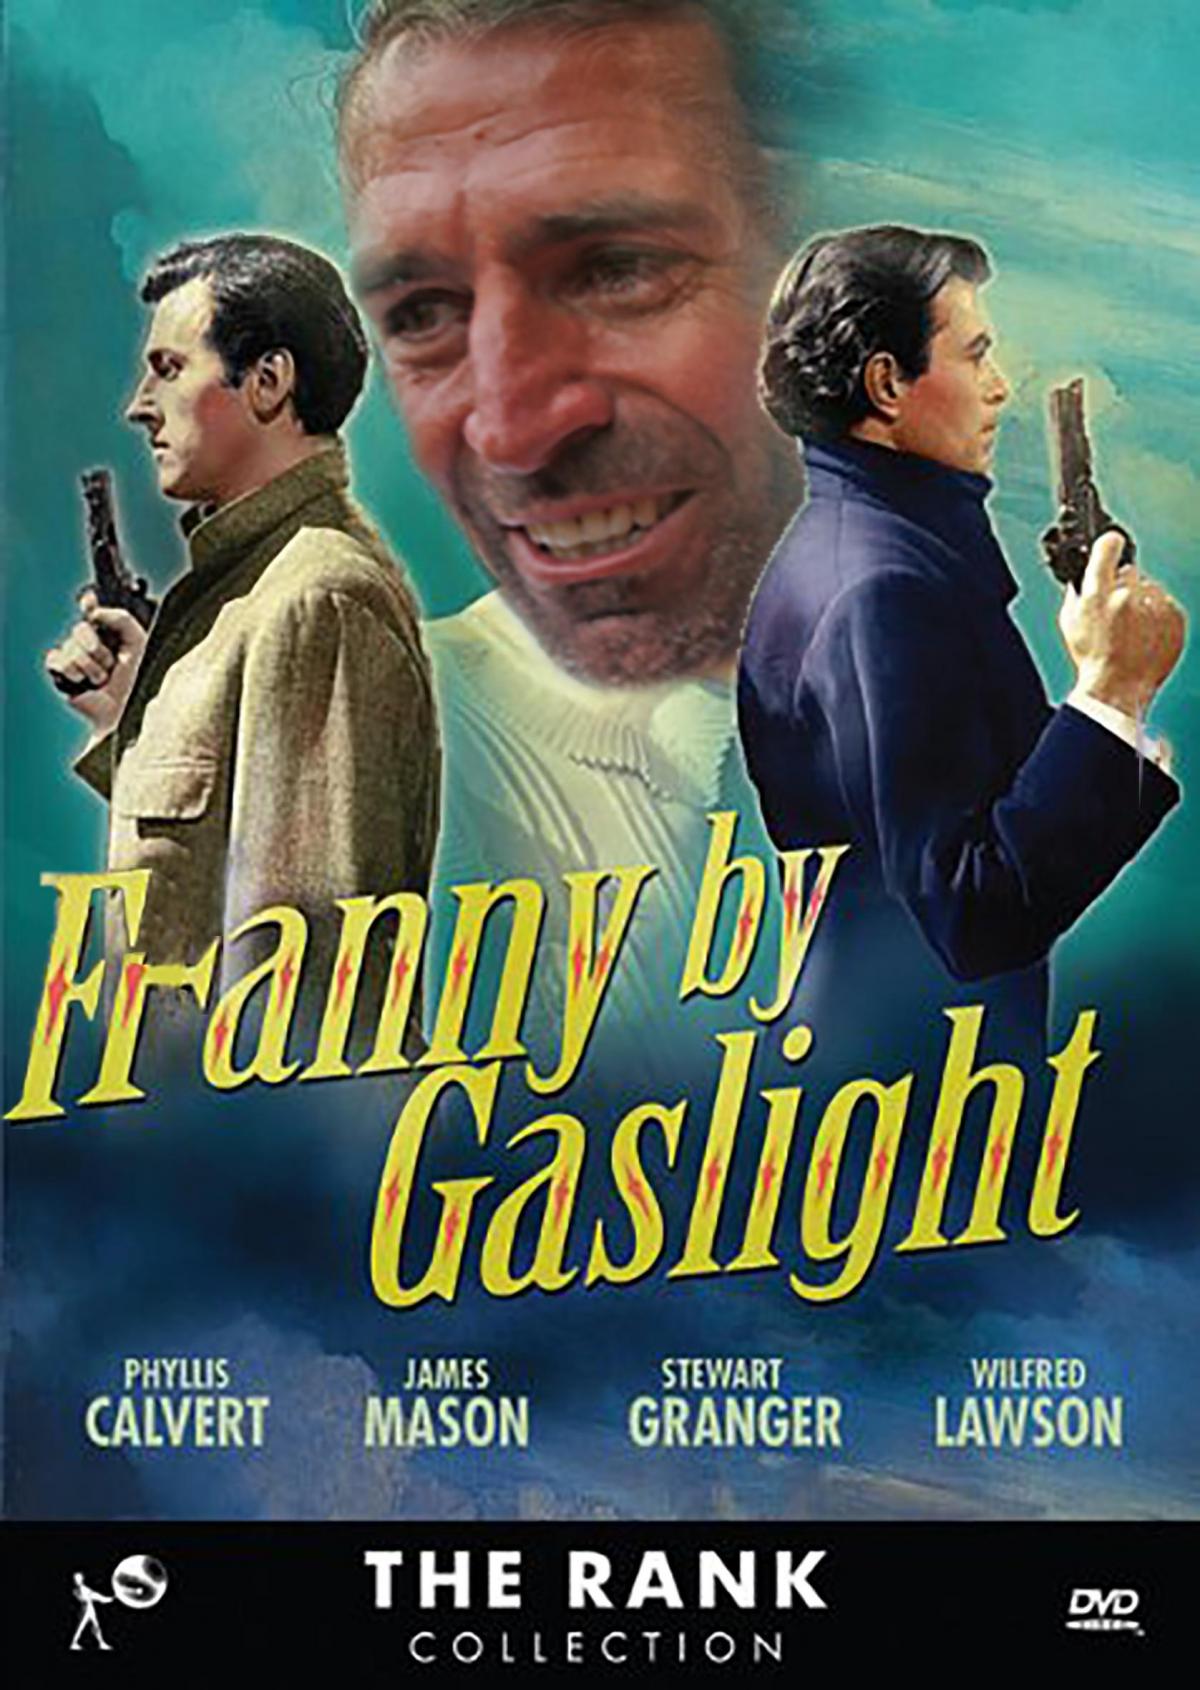 Francis Benali - Franny by the Gaslight